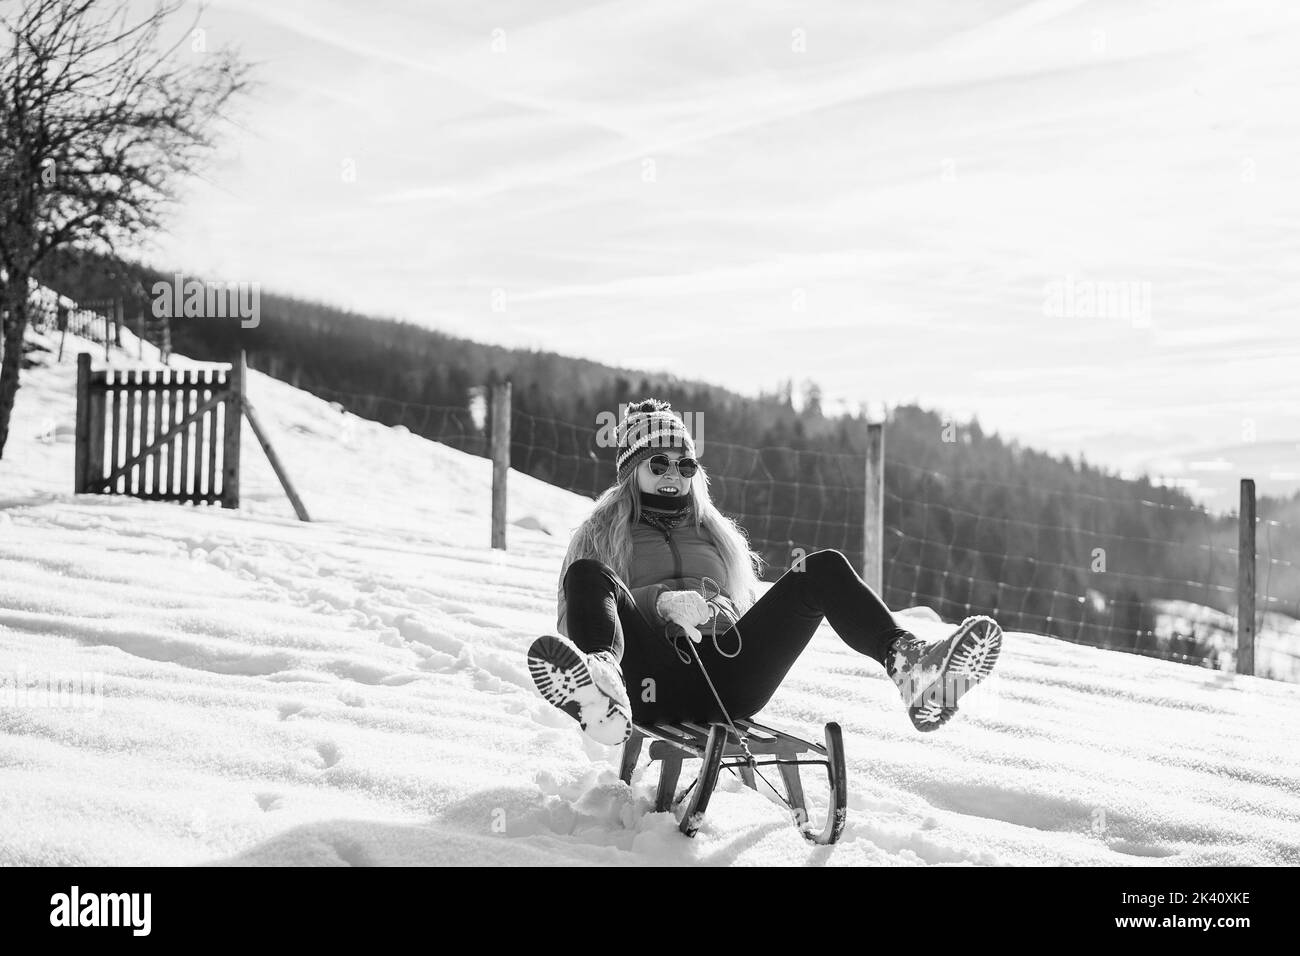 Crazy girl speeding with vintage sledding on snow high mountain - Focus on face - Black and white editing Stock Photo